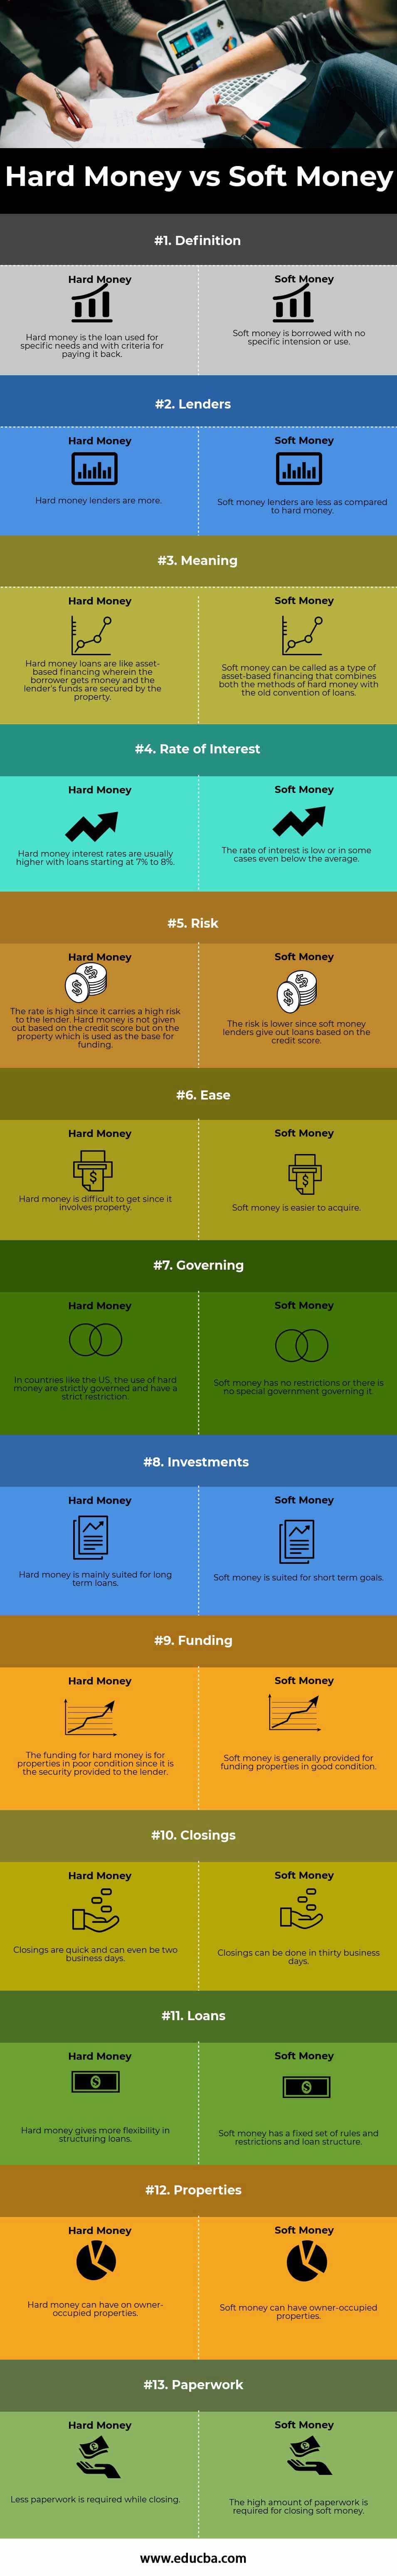 hard money vs soft money (info)